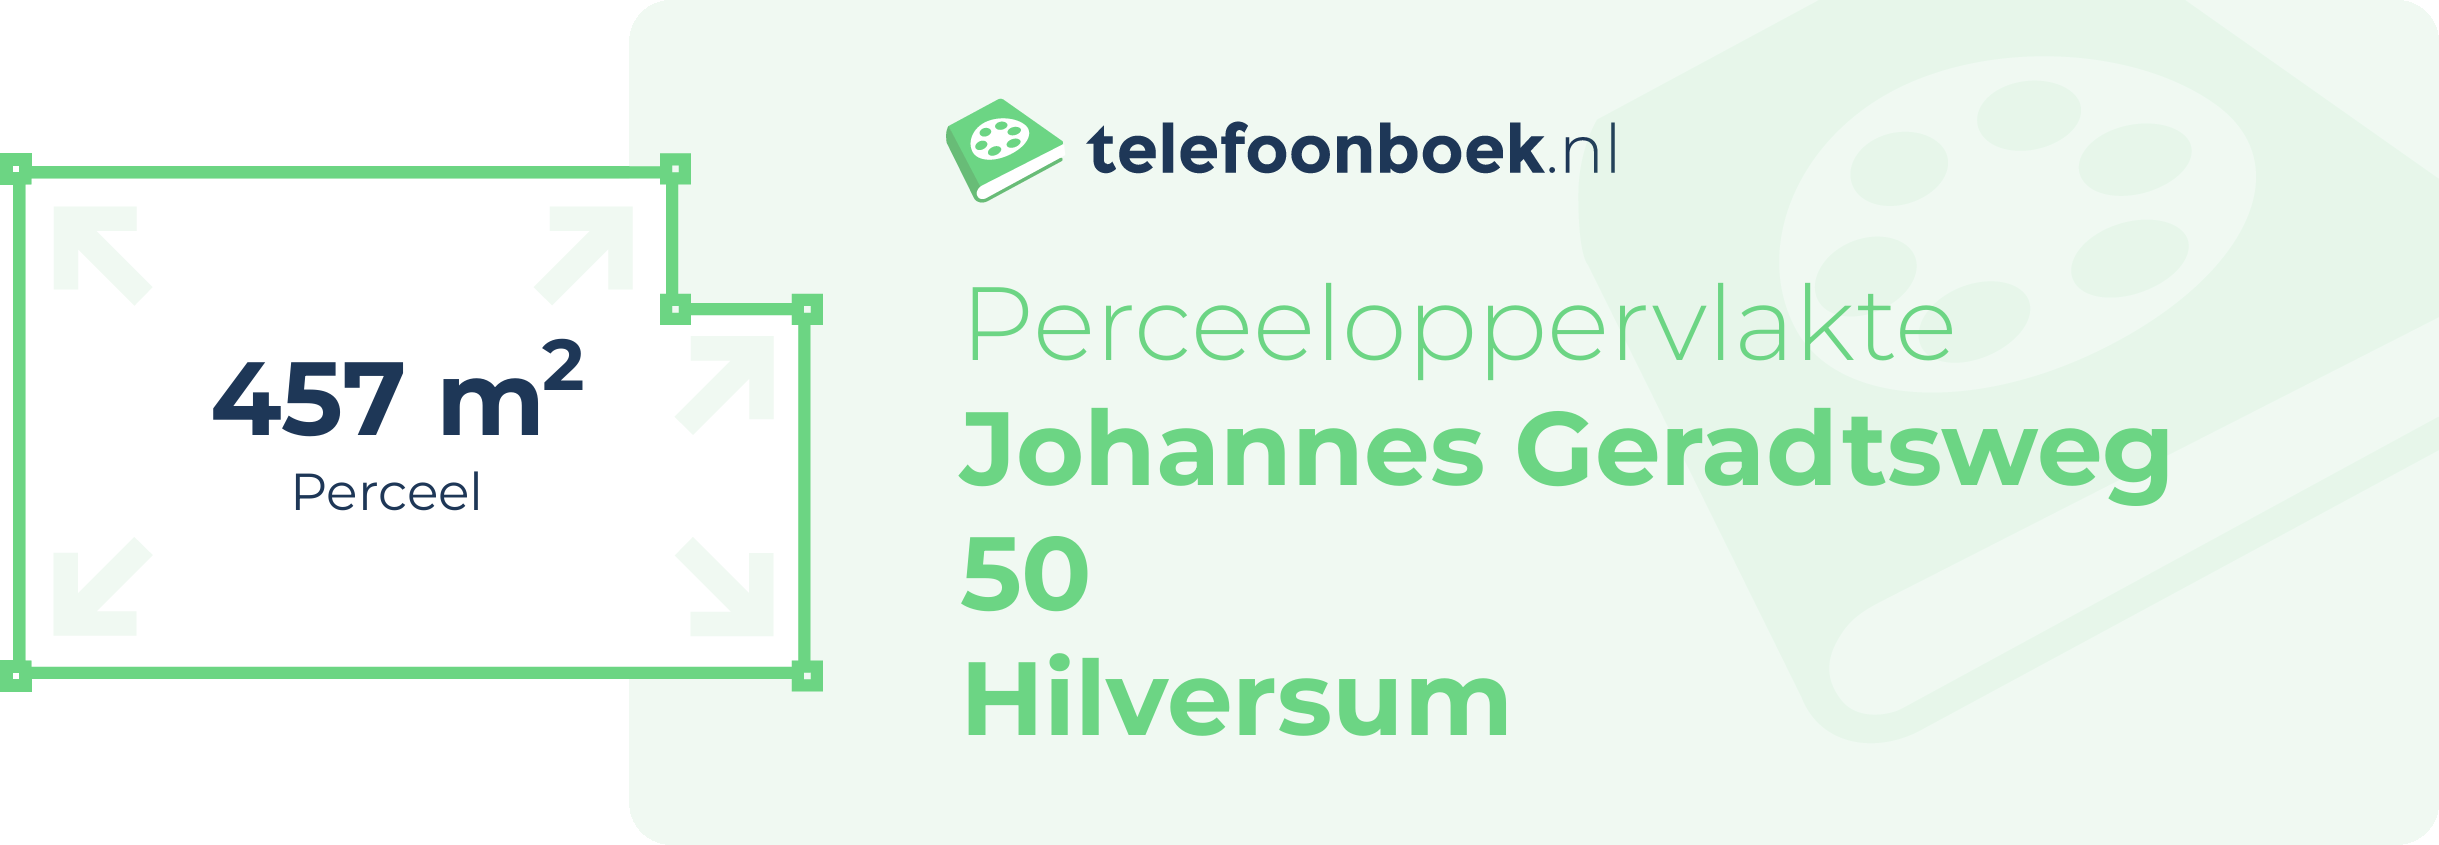 Perceeloppervlakte Johannes Geradtsweg 50 Hilversum